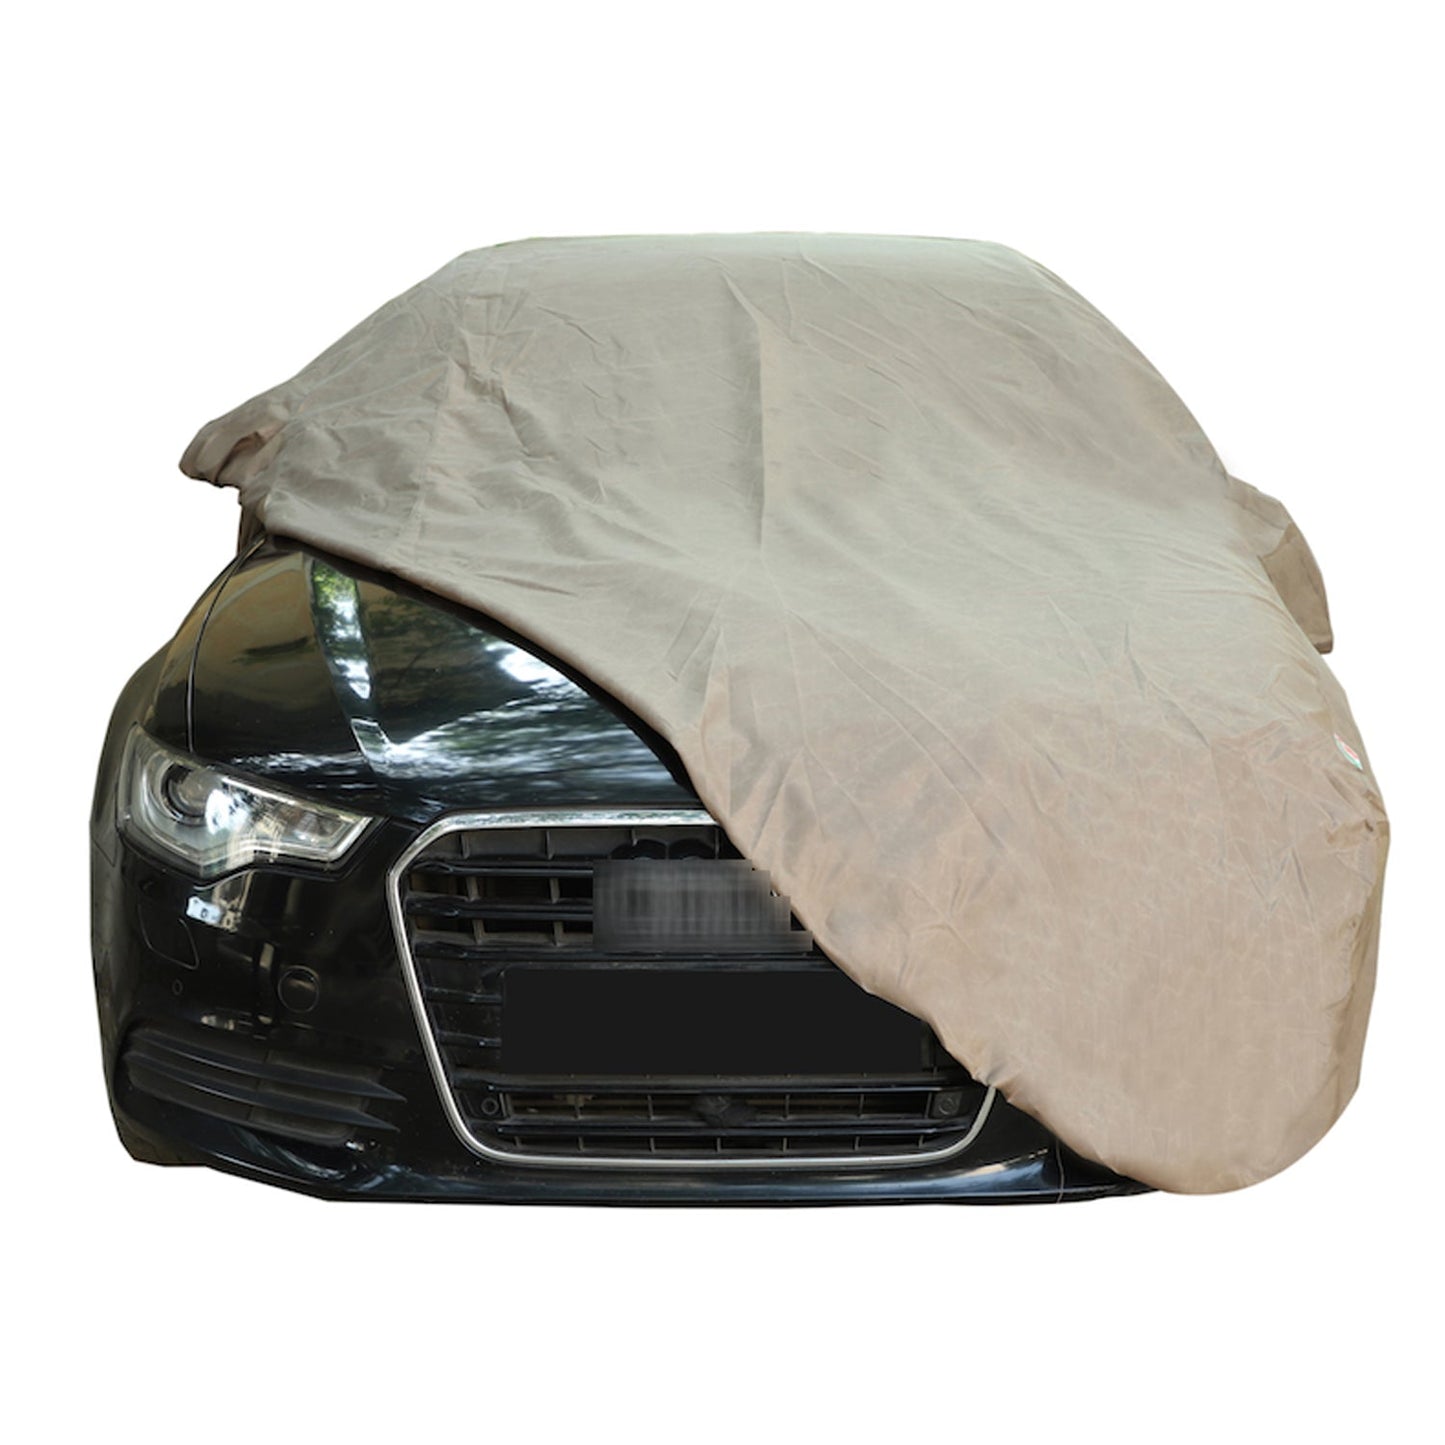 Oshotto Brown 100% Waterproof Car Body Cover with Mirror Pockets For Maruti Suzuki Celerio